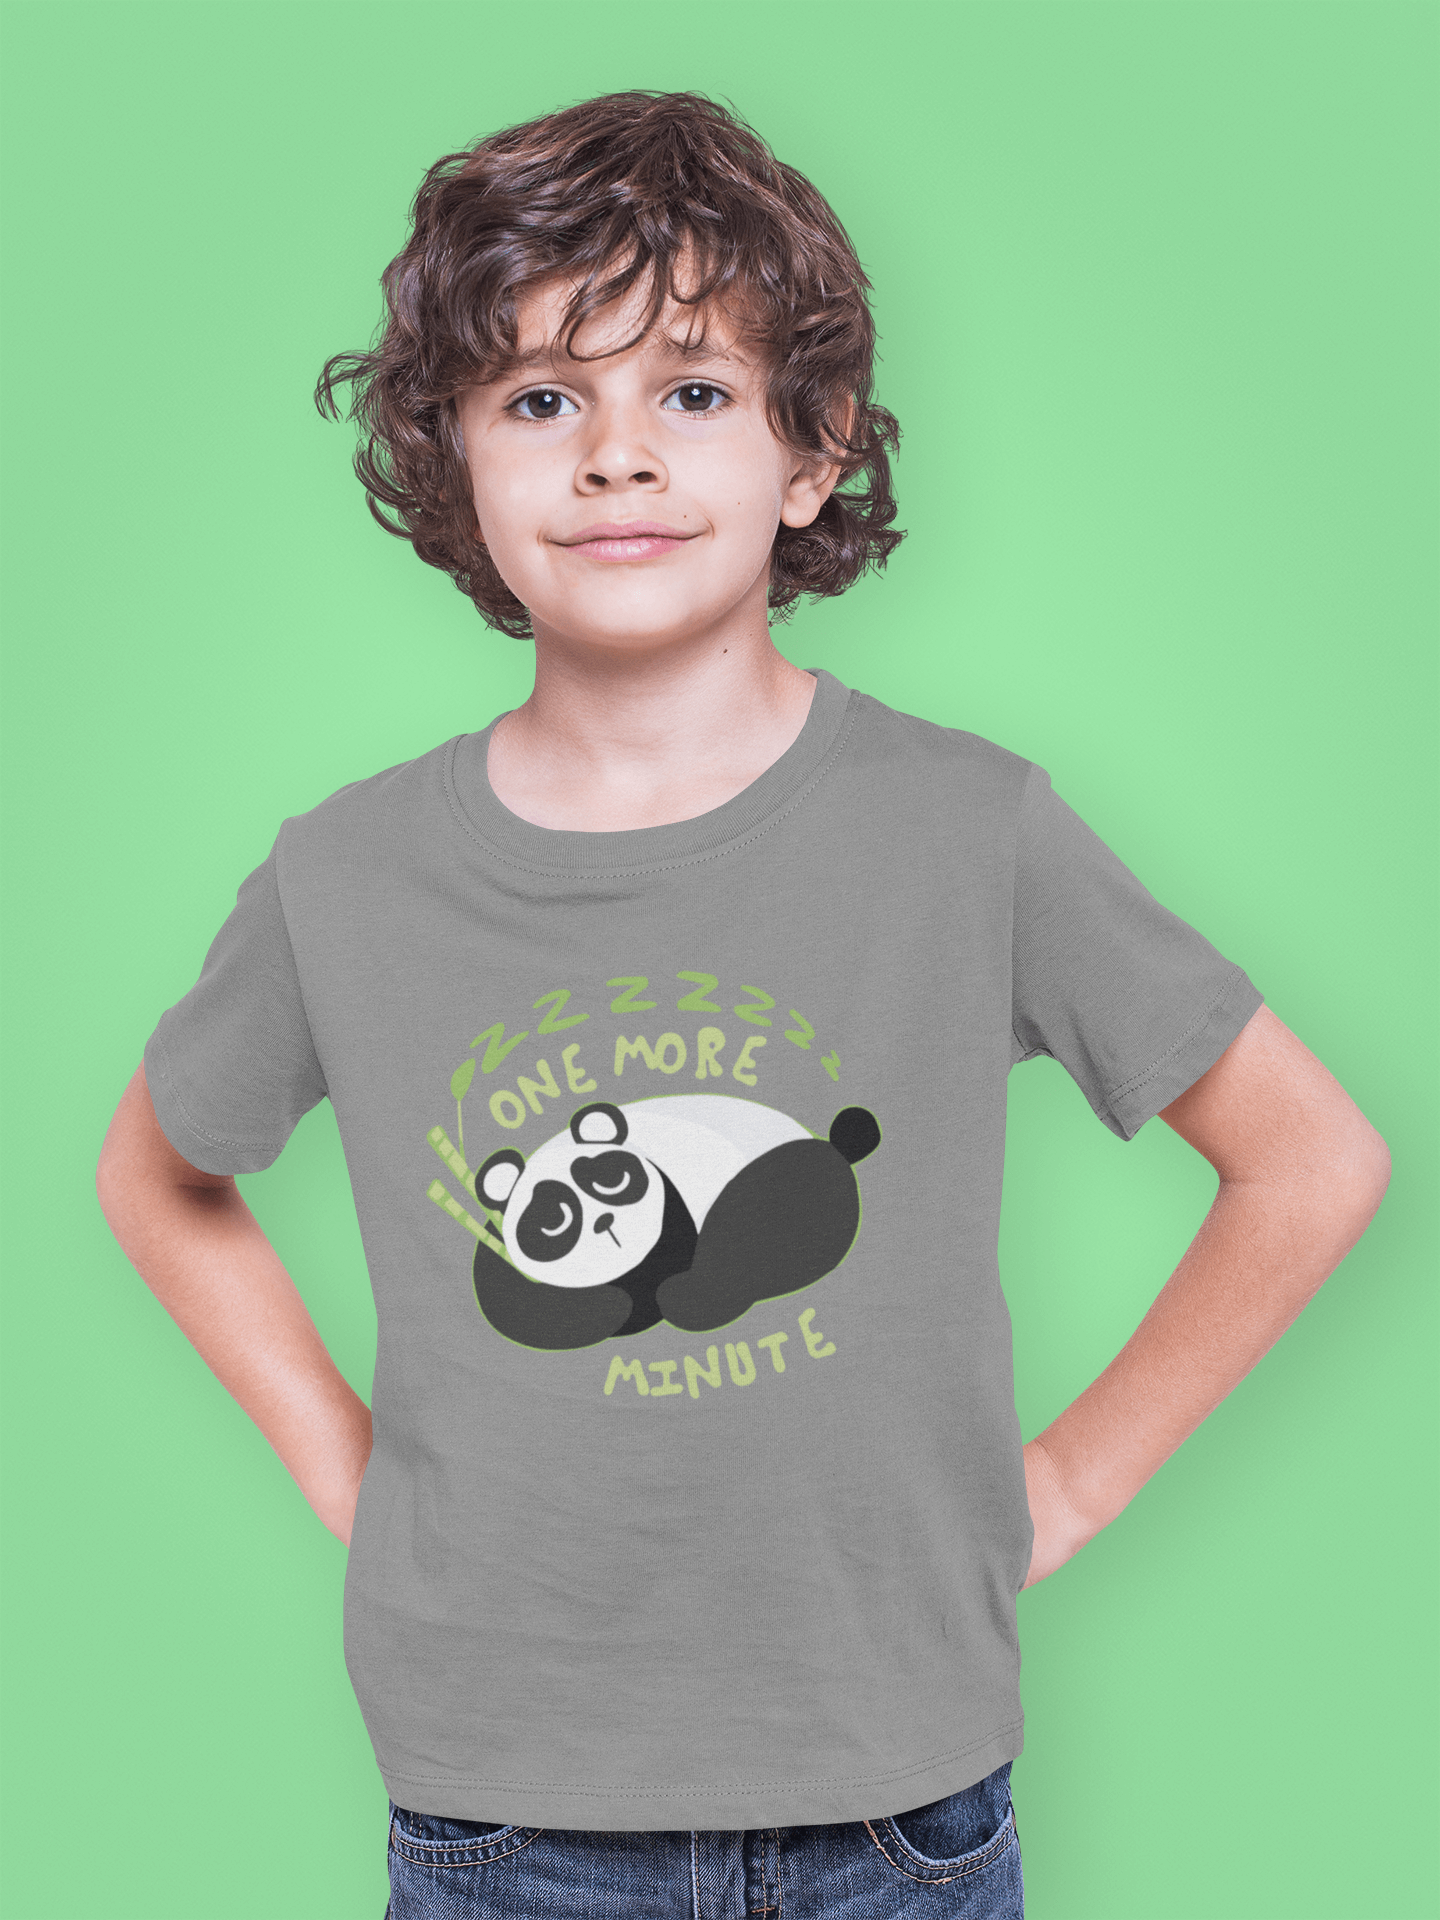 Kids t shirts Sleepy Panda with worldwide shipping on Vivamake.com